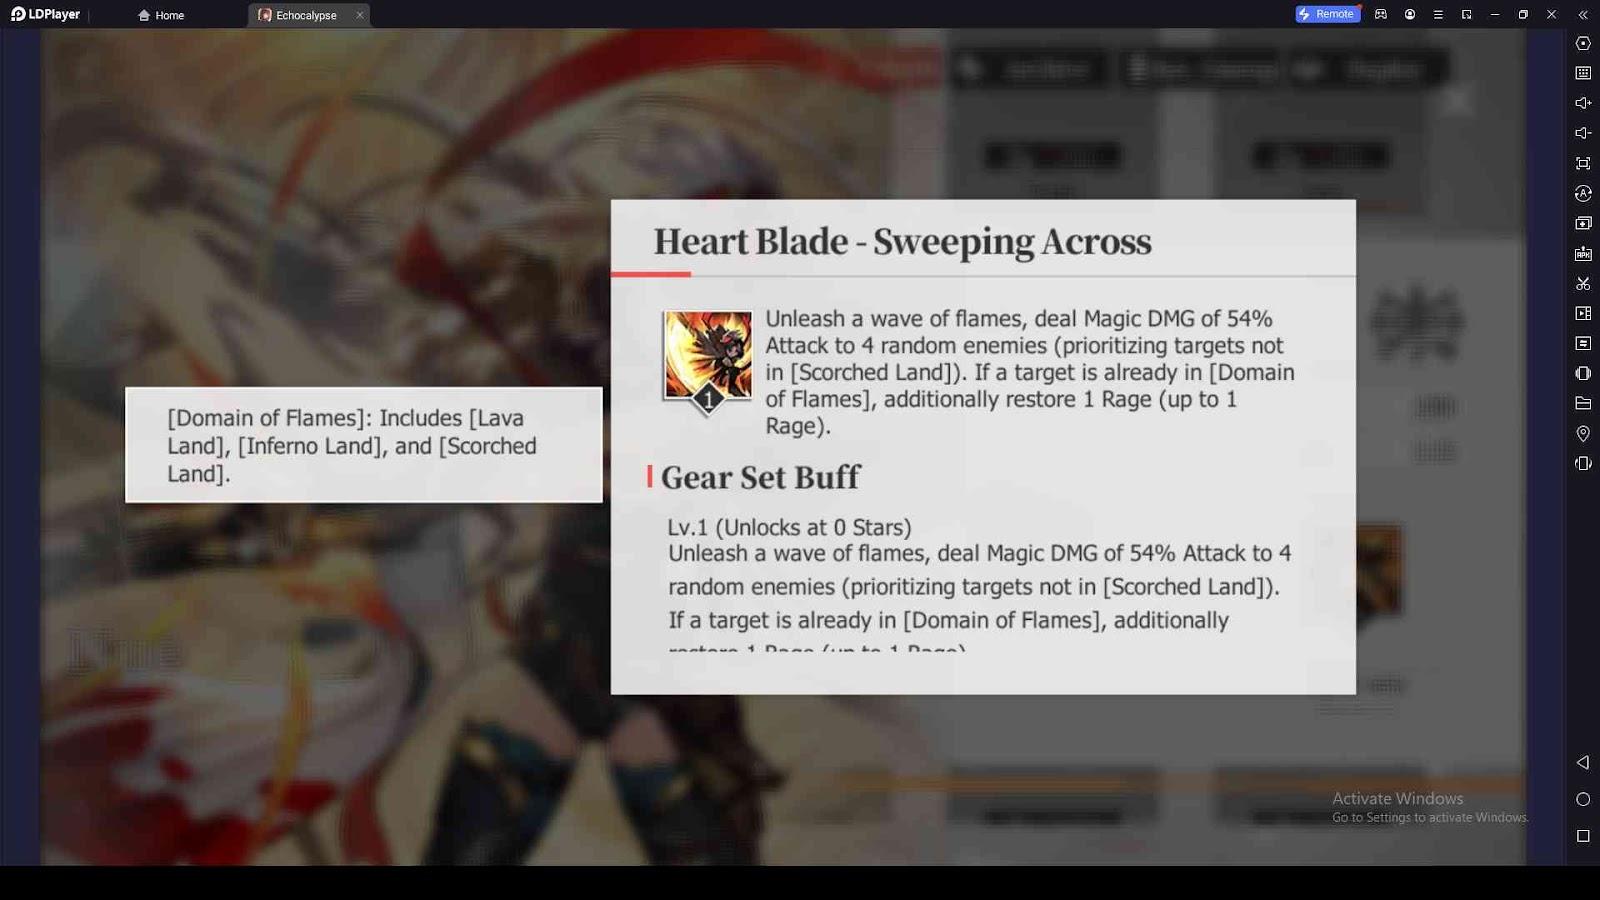 Heart Blade - Sweeping Across